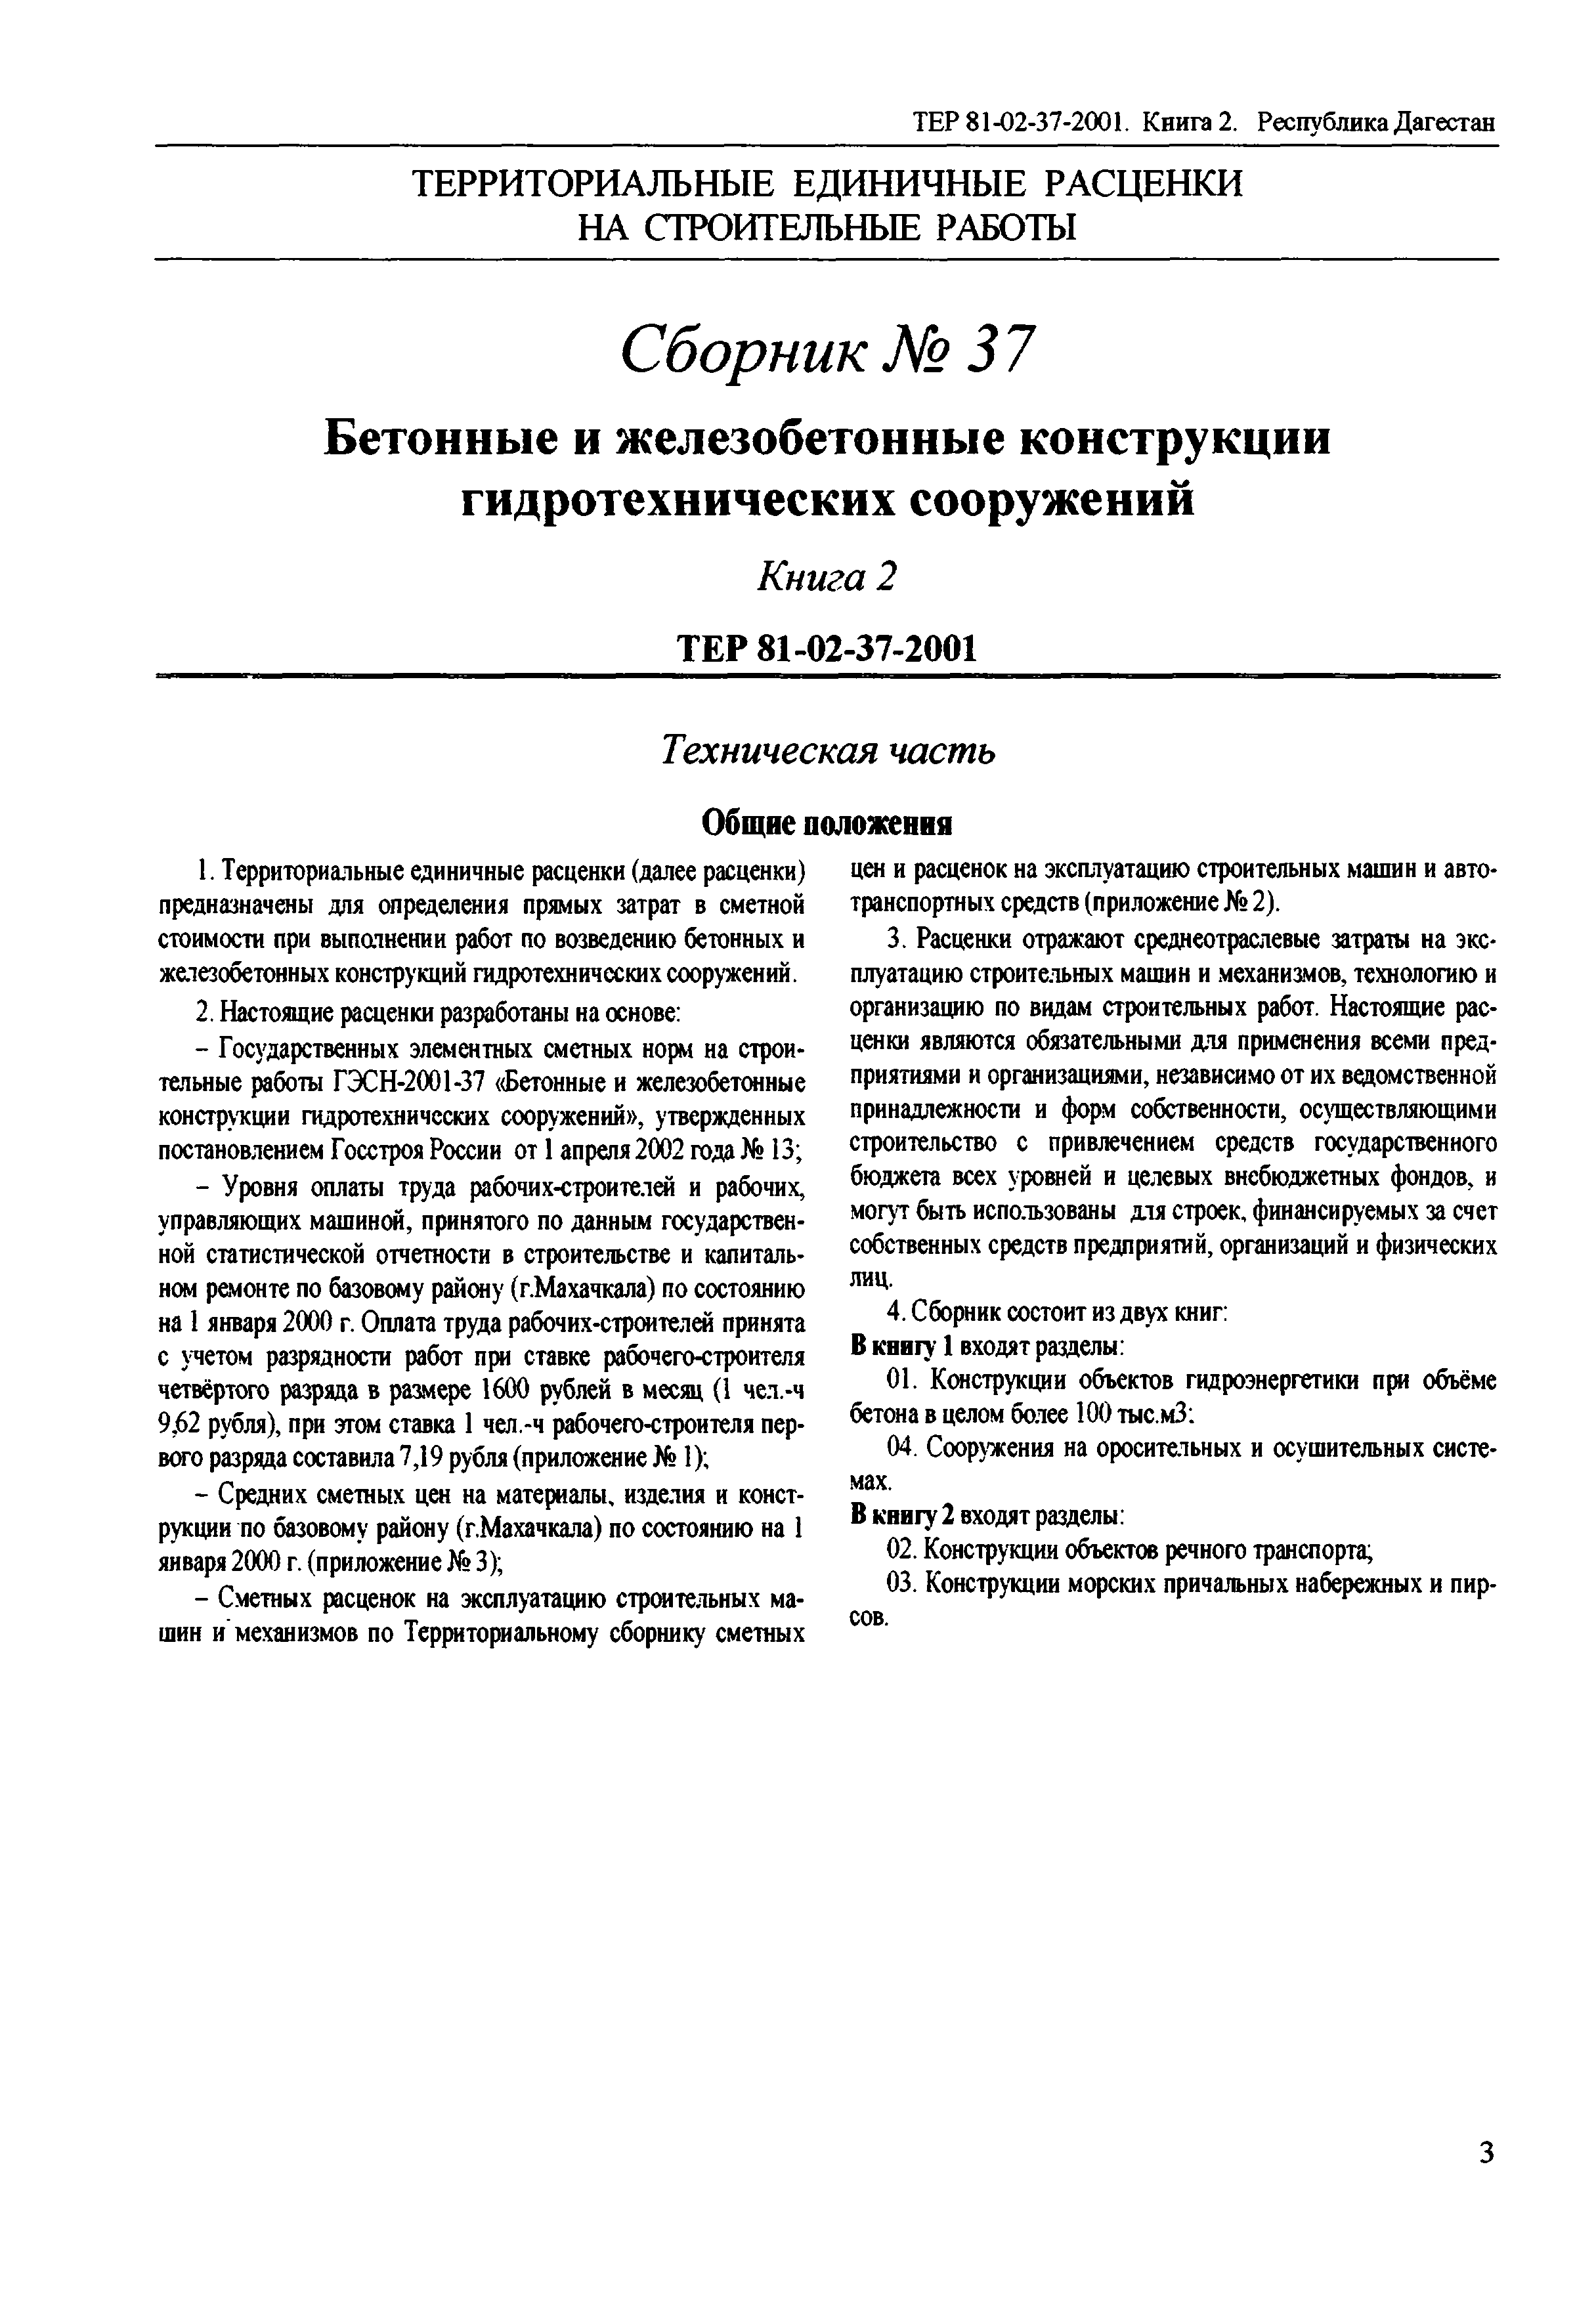 ТЕР Республика Дагестан 2001-37